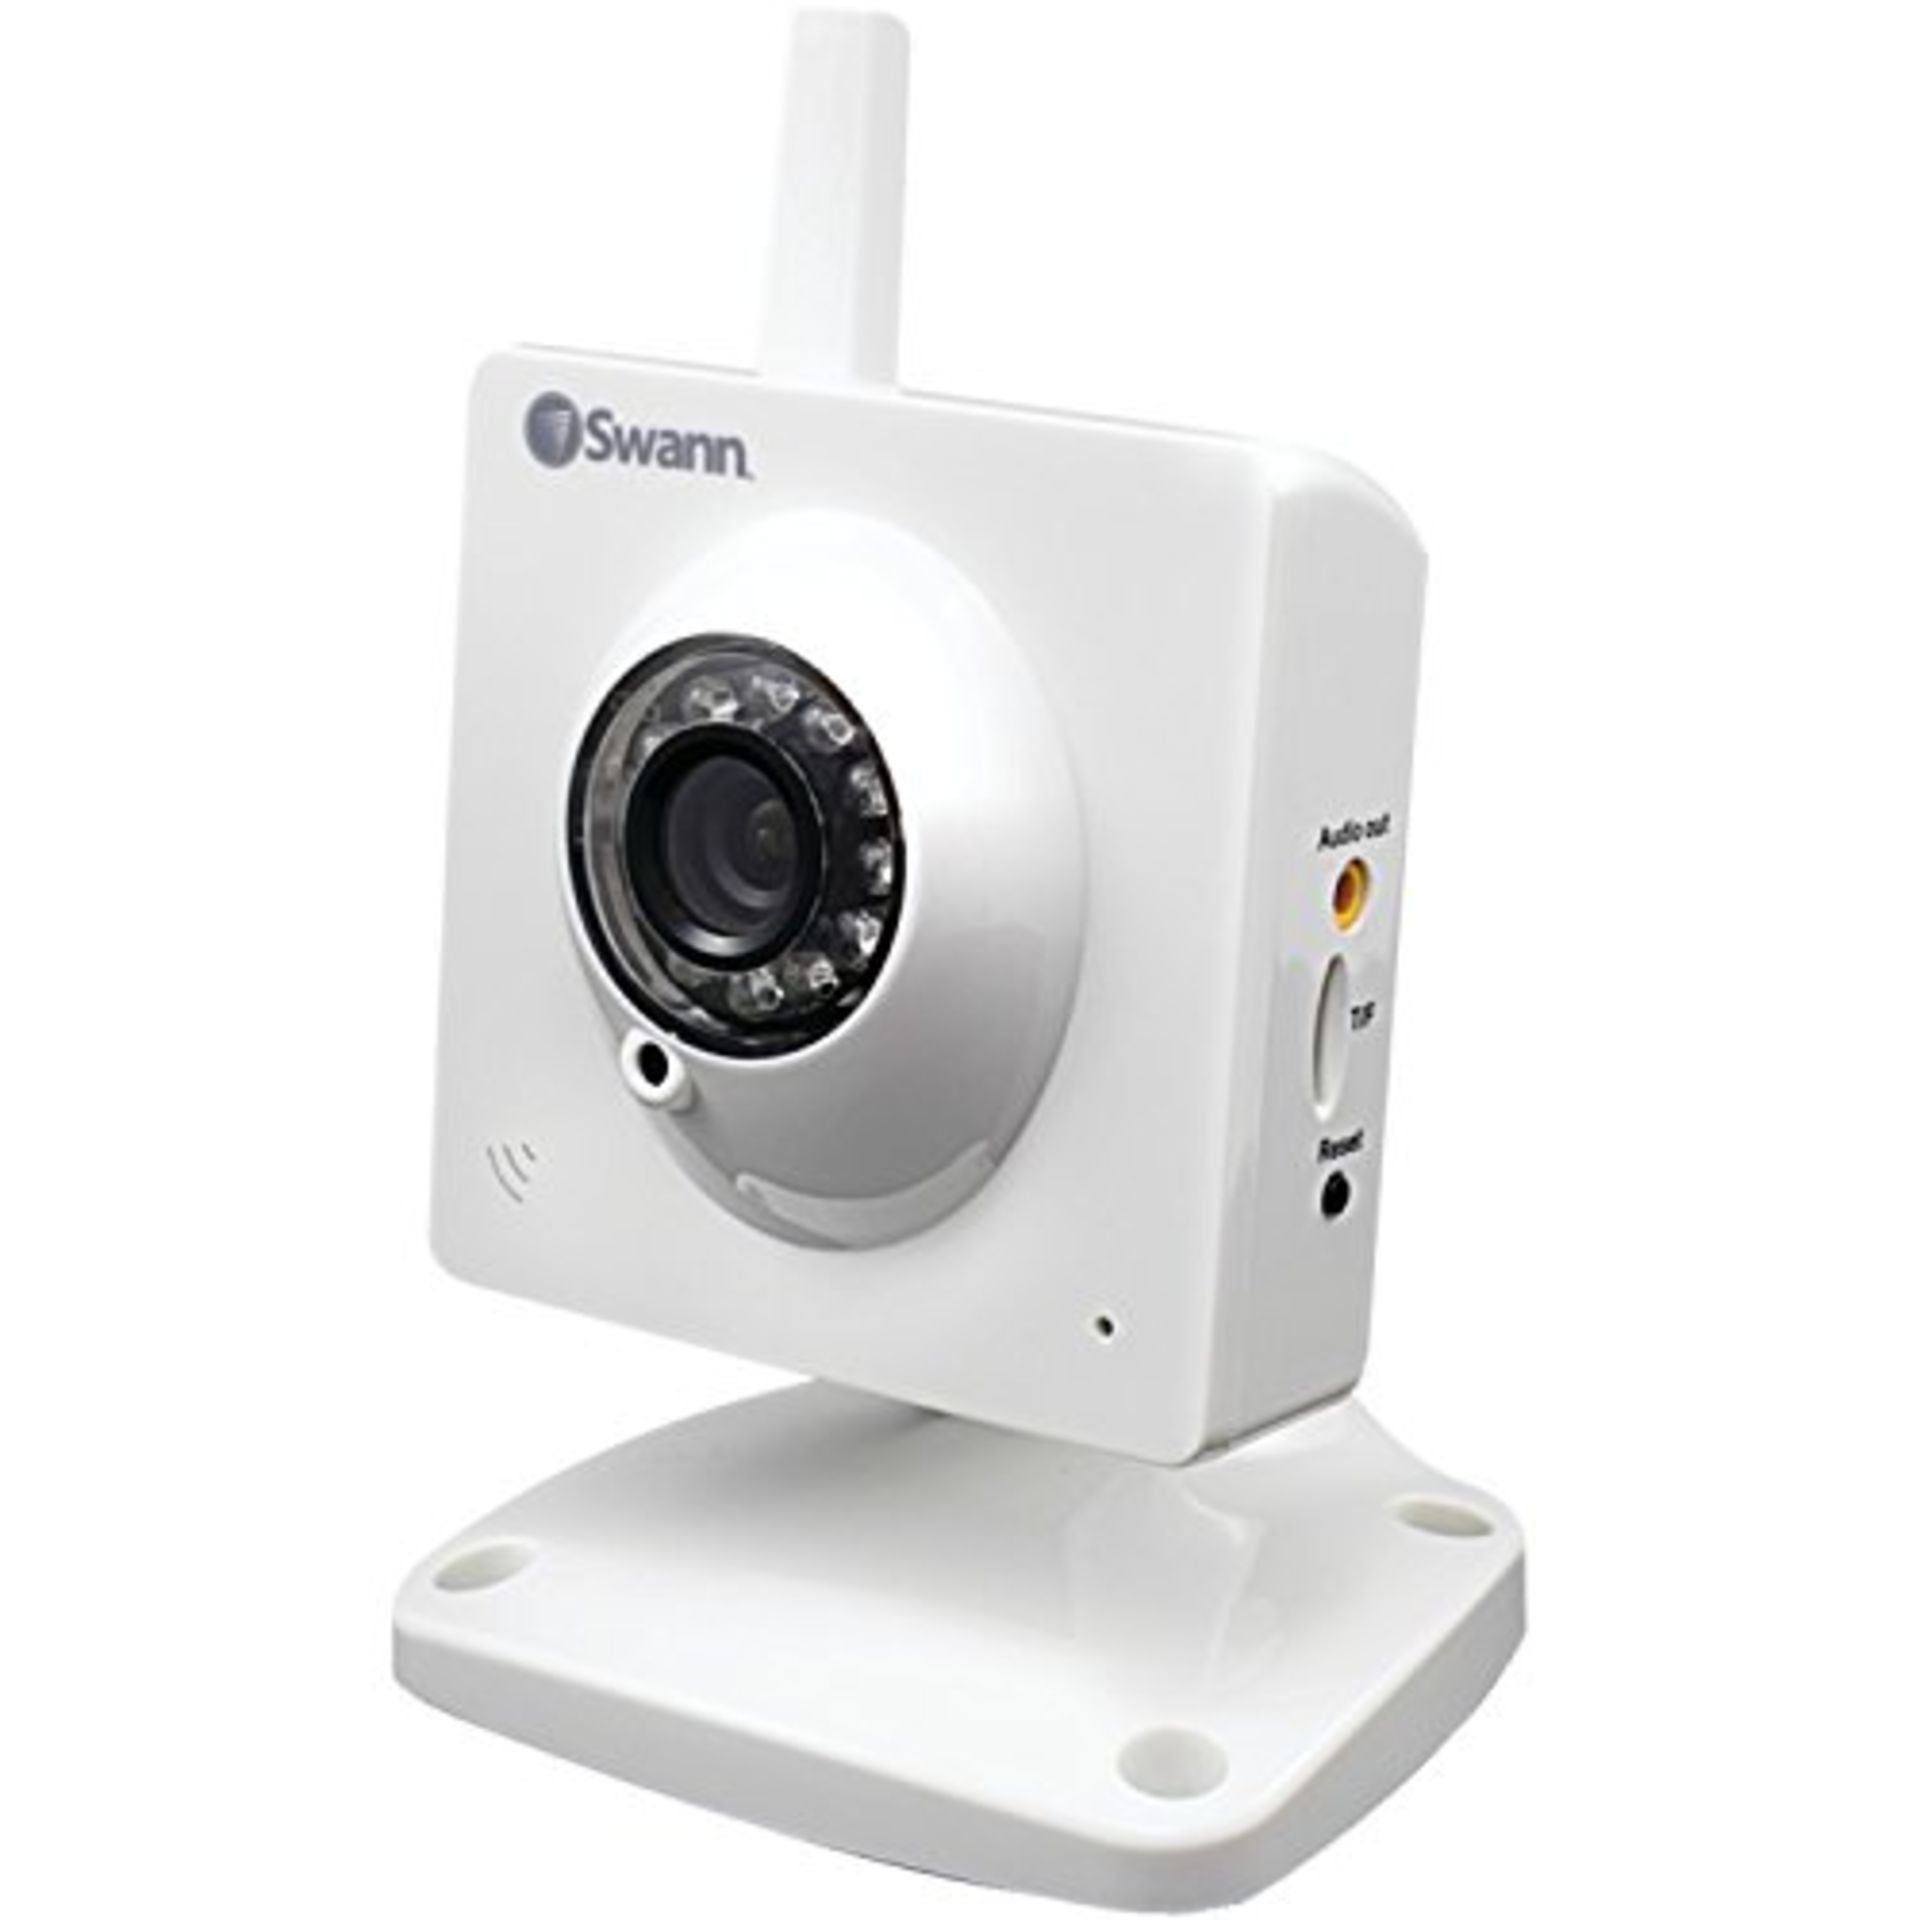 V Brand New Swann Plug & Play 720p HD Wi-Fi Security Camera Amazon Price - £129.99